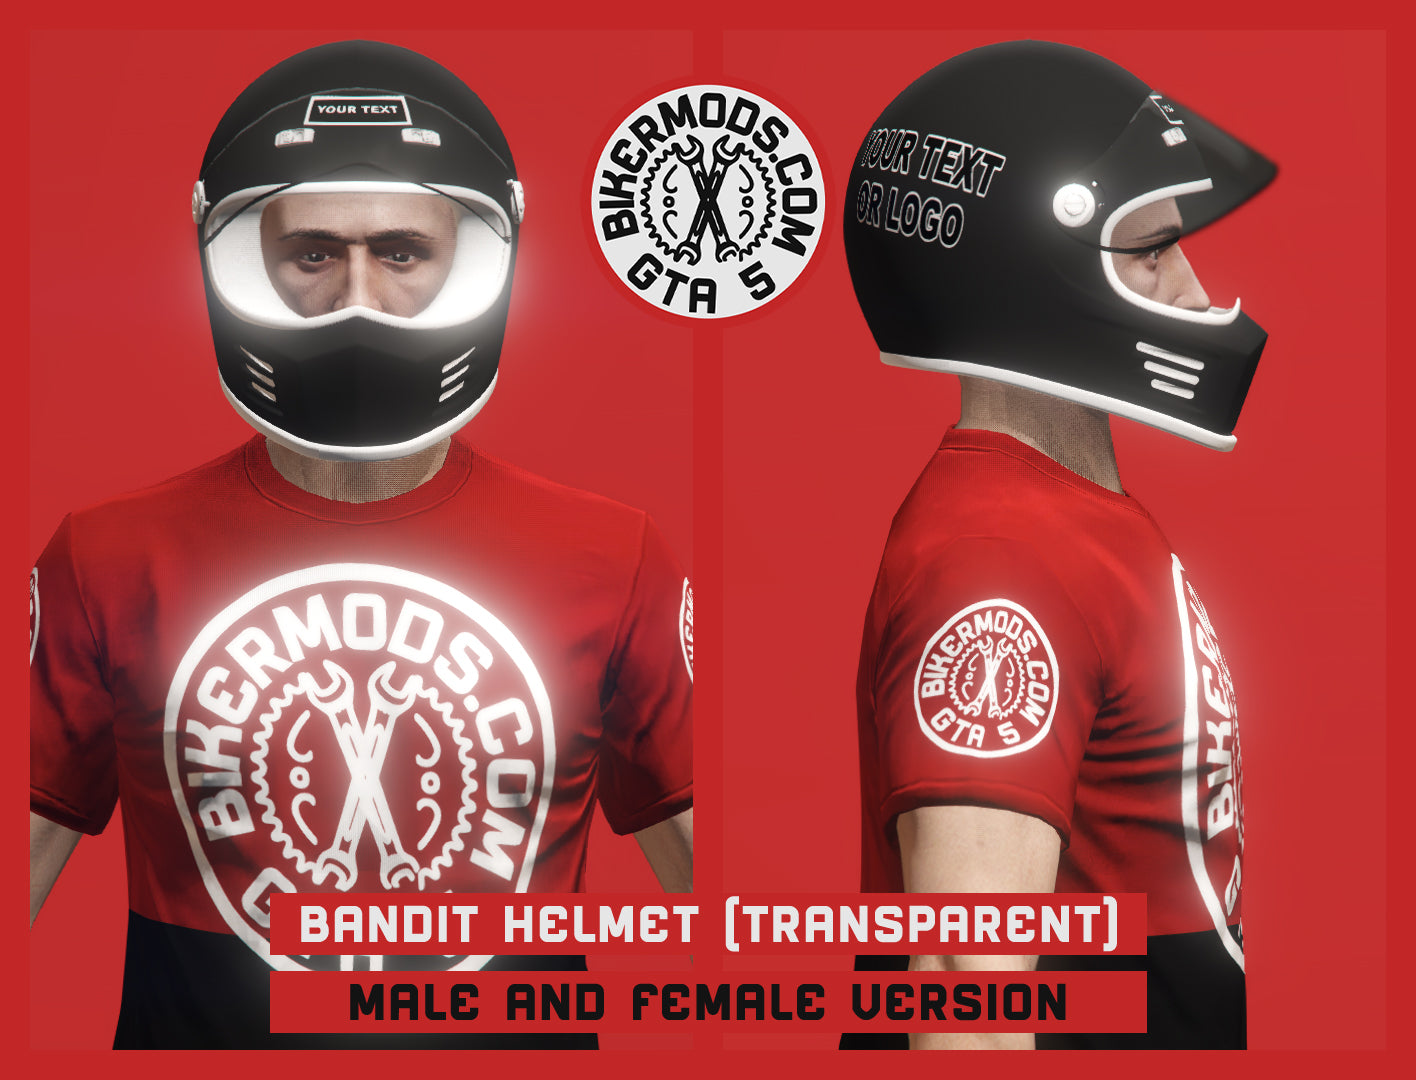 Bandit Helmet (Transparent Open Visor) Photoshop Template Included